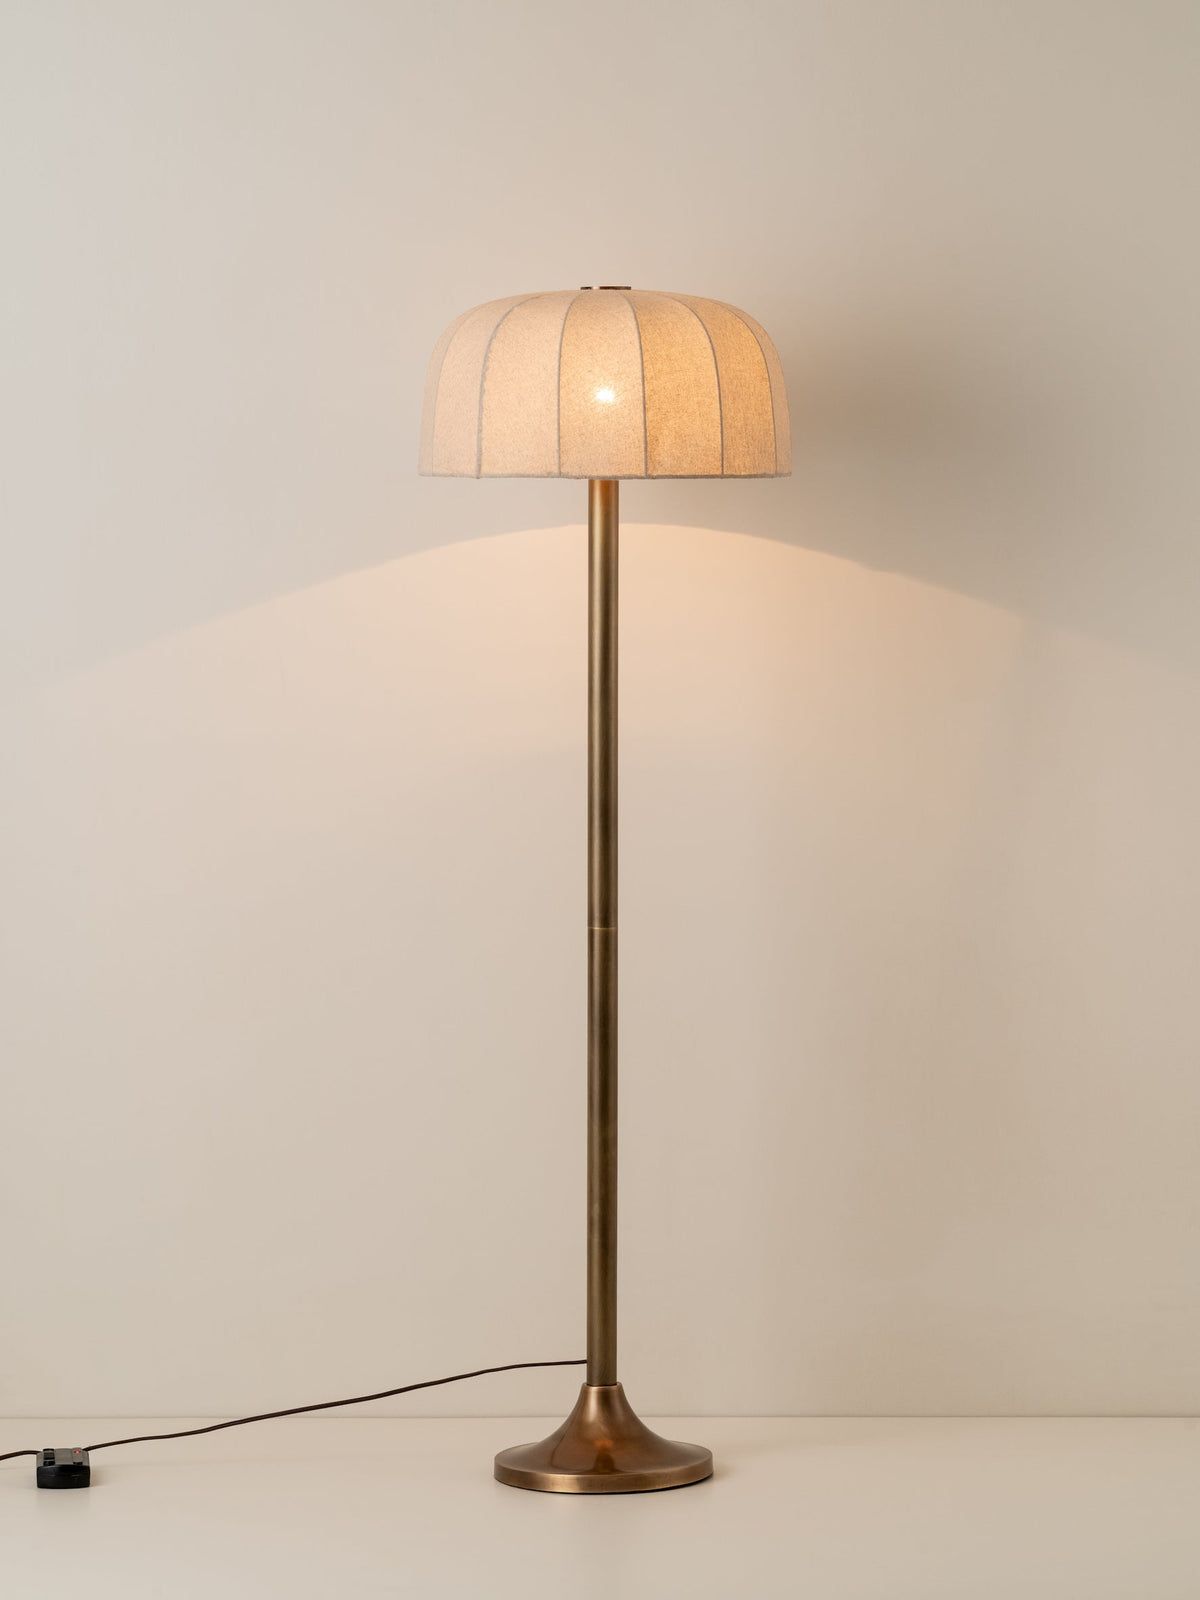 Brass Floor Lamp : The Elegance of a Brass Floor Lamp in Home Decor